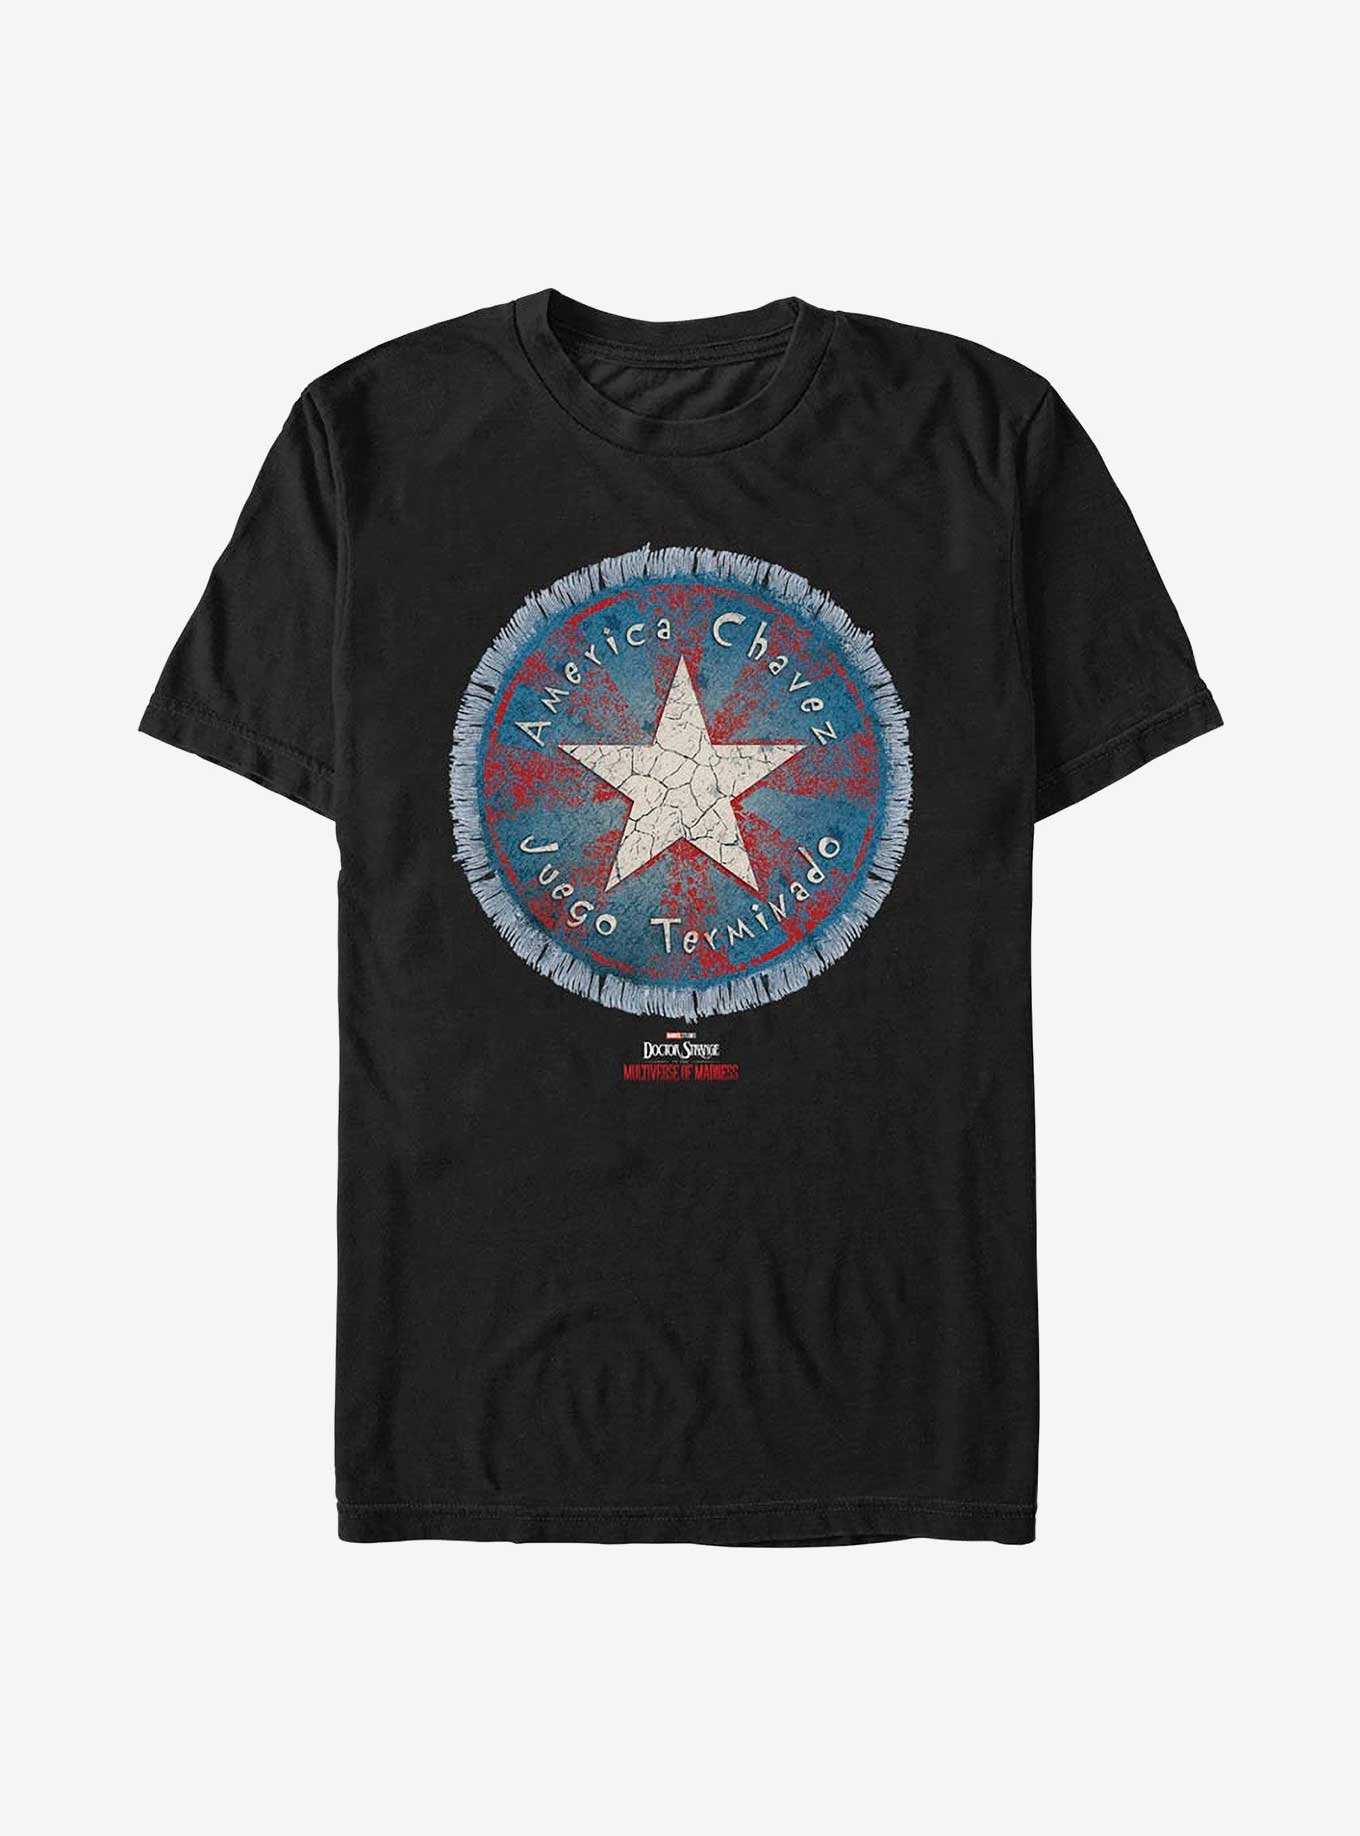 Marvel Doctor Strange Multiverse Of Madness America Chavez Badge T-Shirt, , hi-res